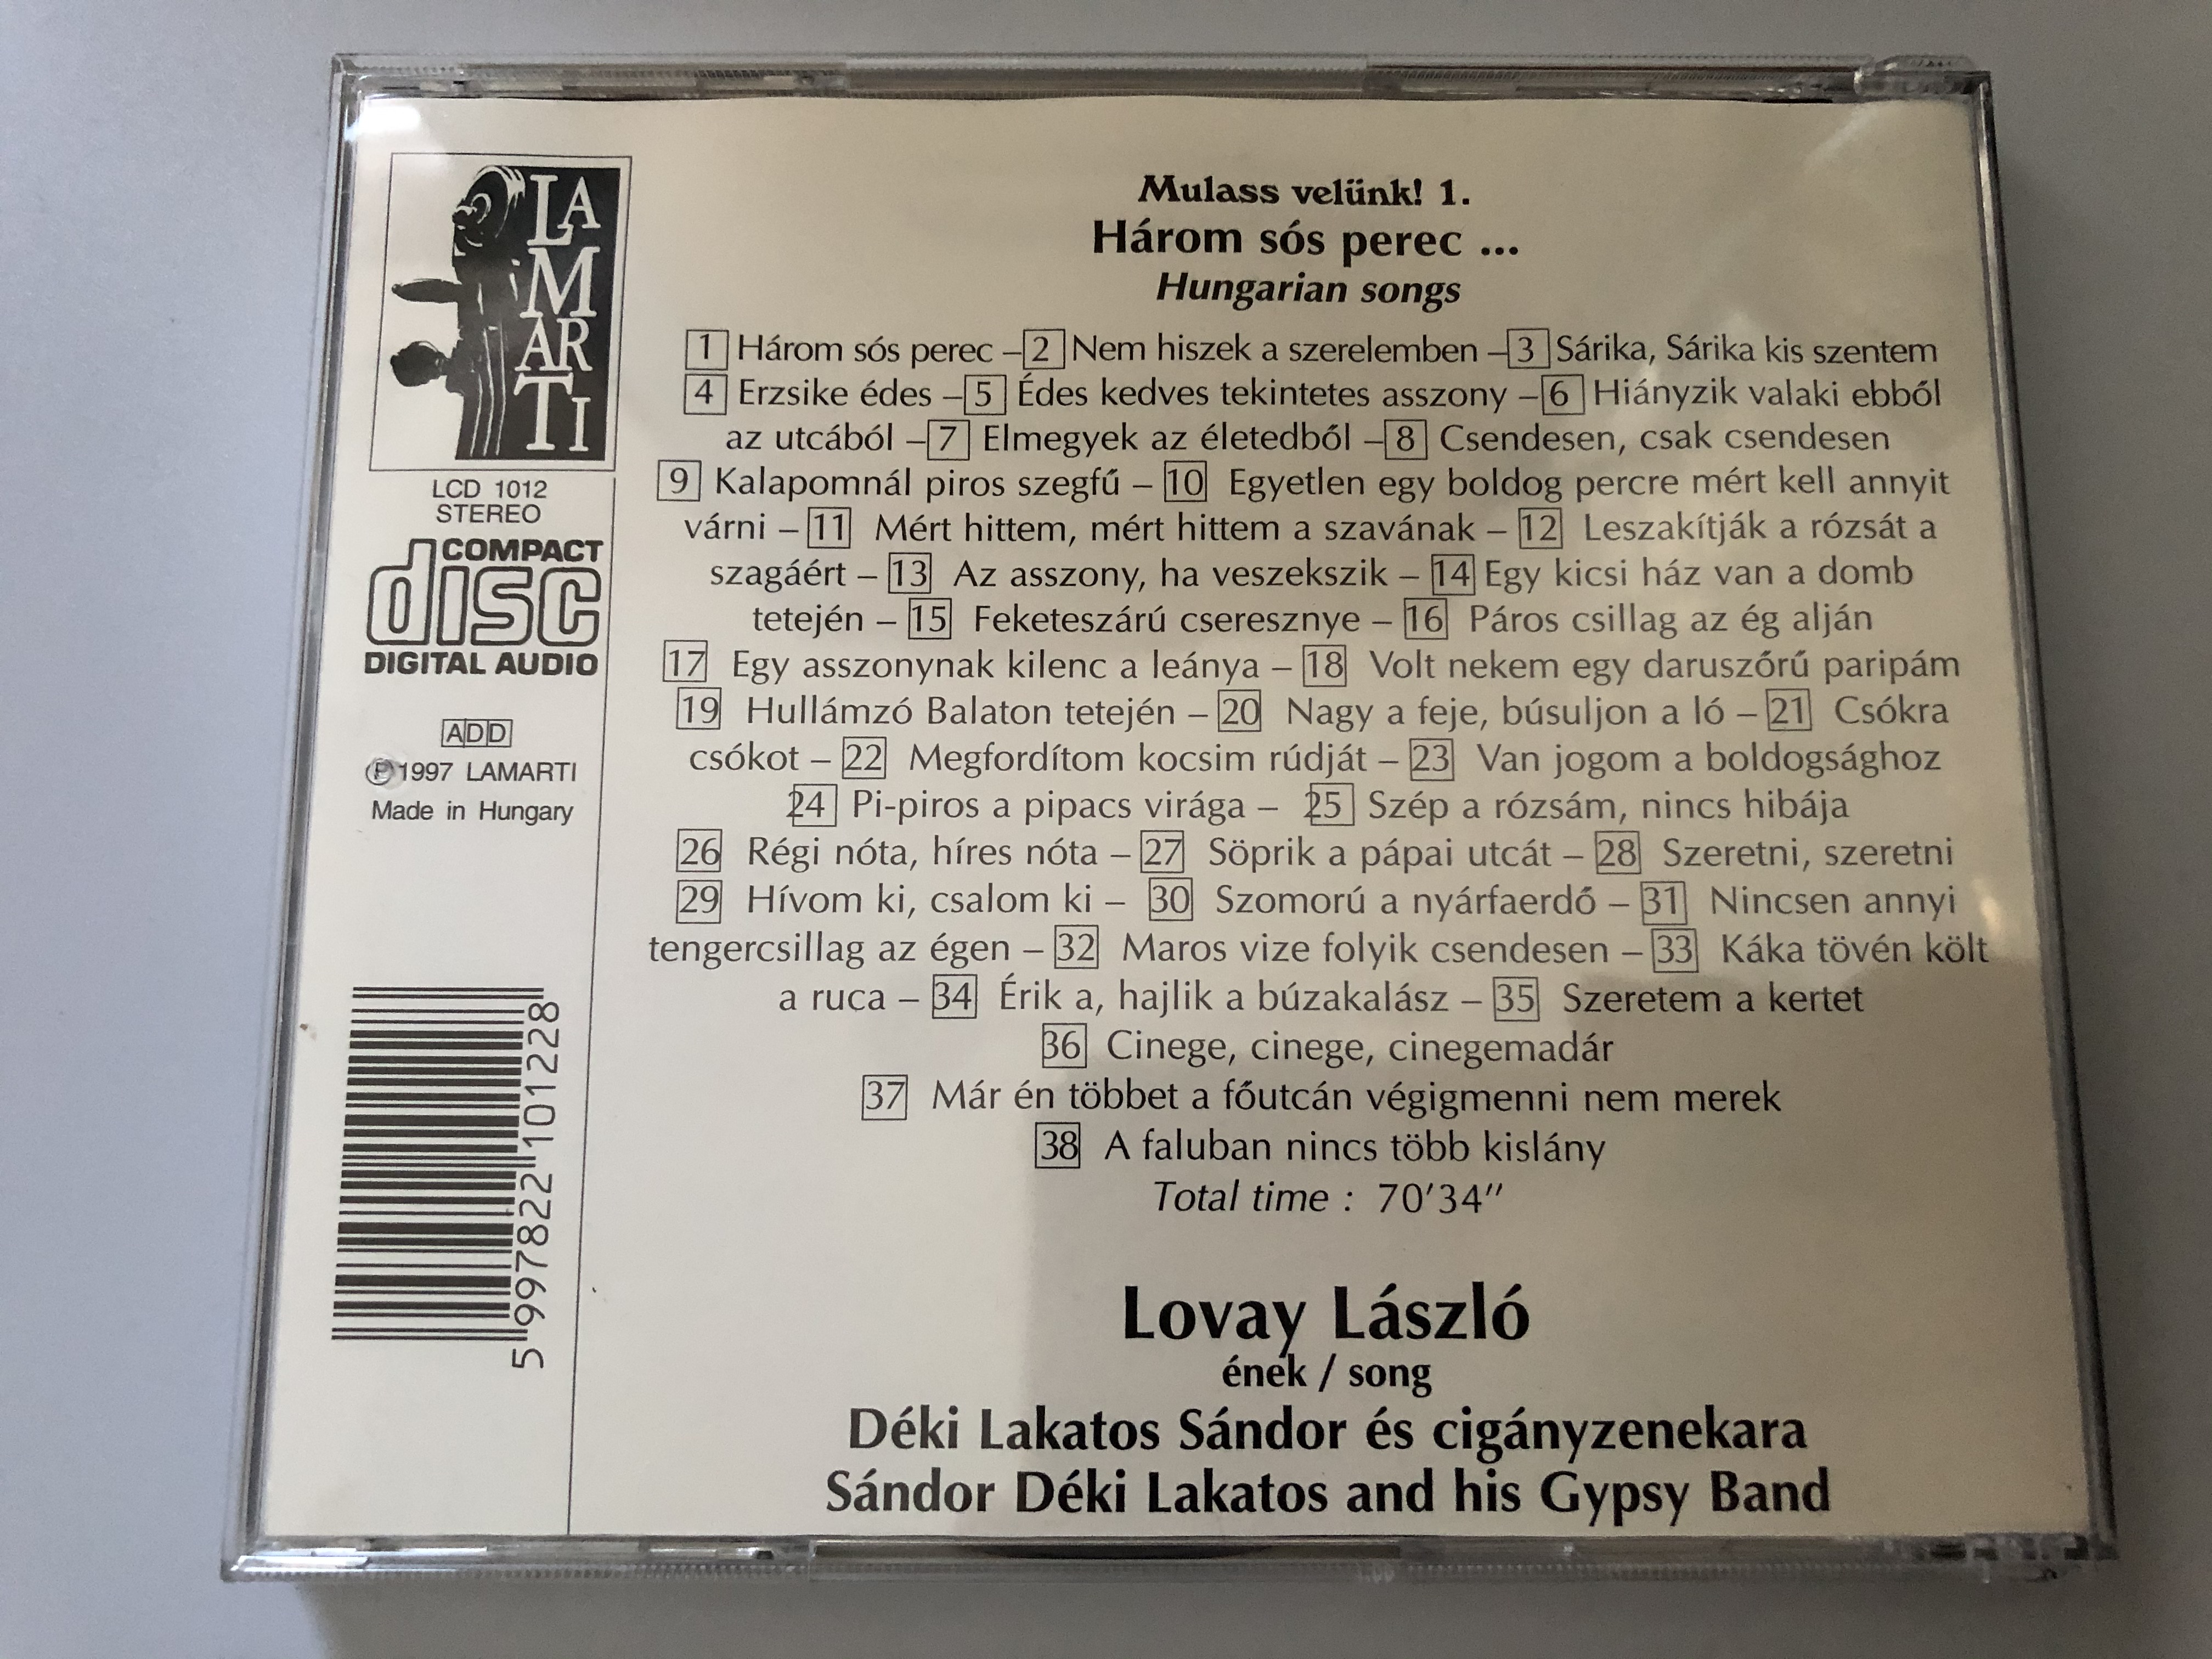 h-rom-s-s-perec-hungarian-songs-lovay-l-szl-d-ki-lakatos-s-ndor-es-ciganyzenekara-lamarti-audio-cd-1997-stereo-lcd-1012-7-.jpg